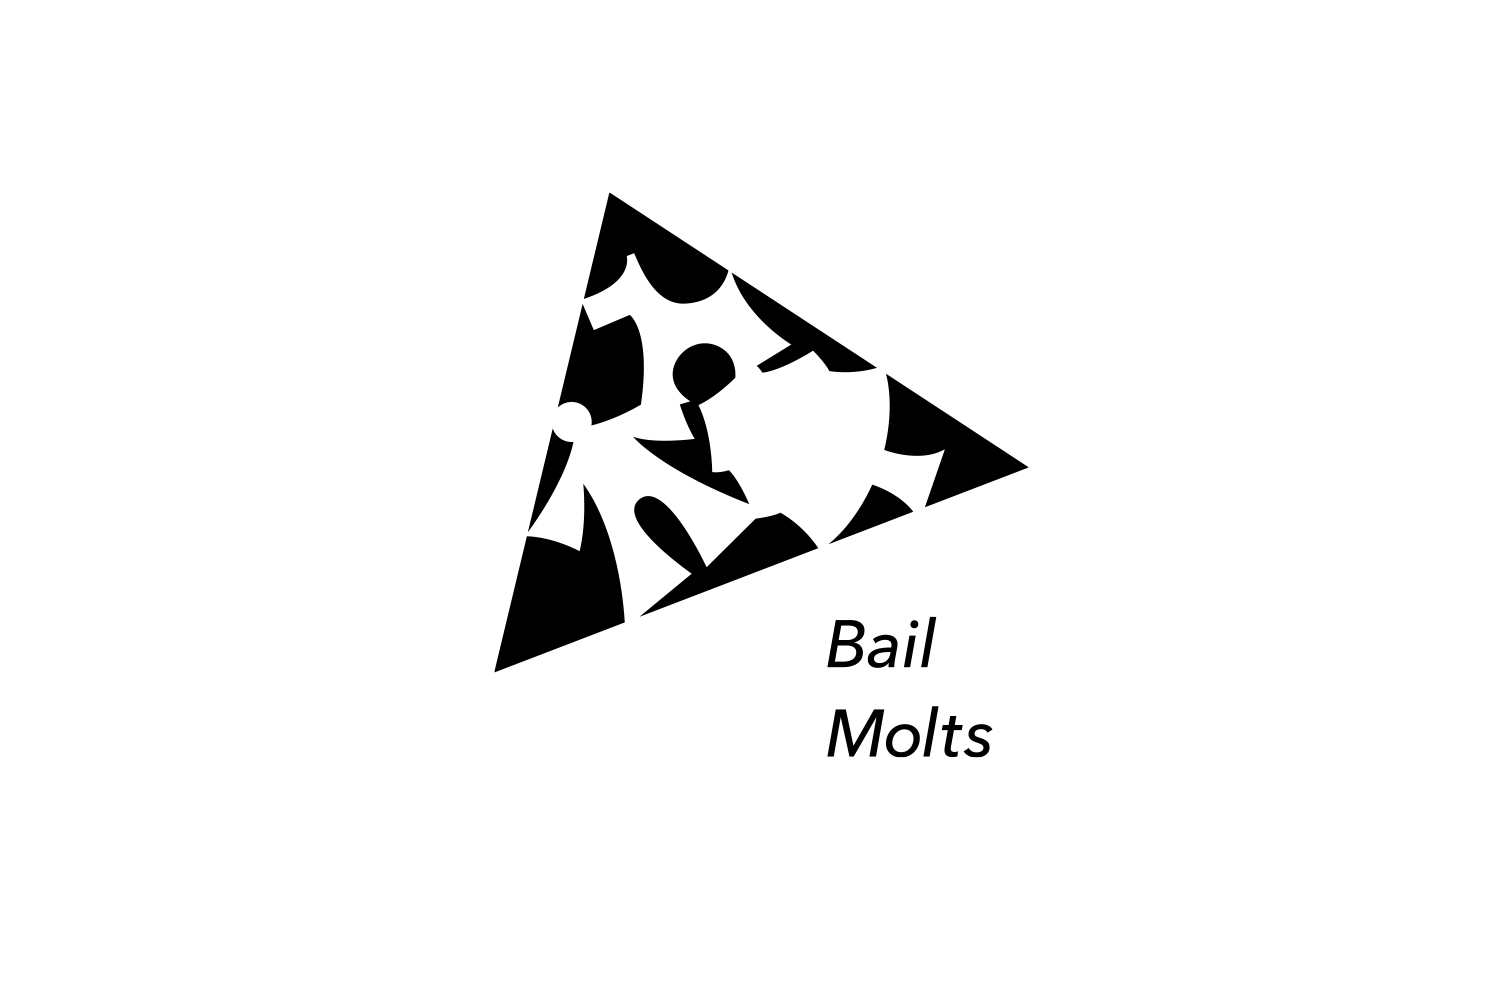 Bail Molts